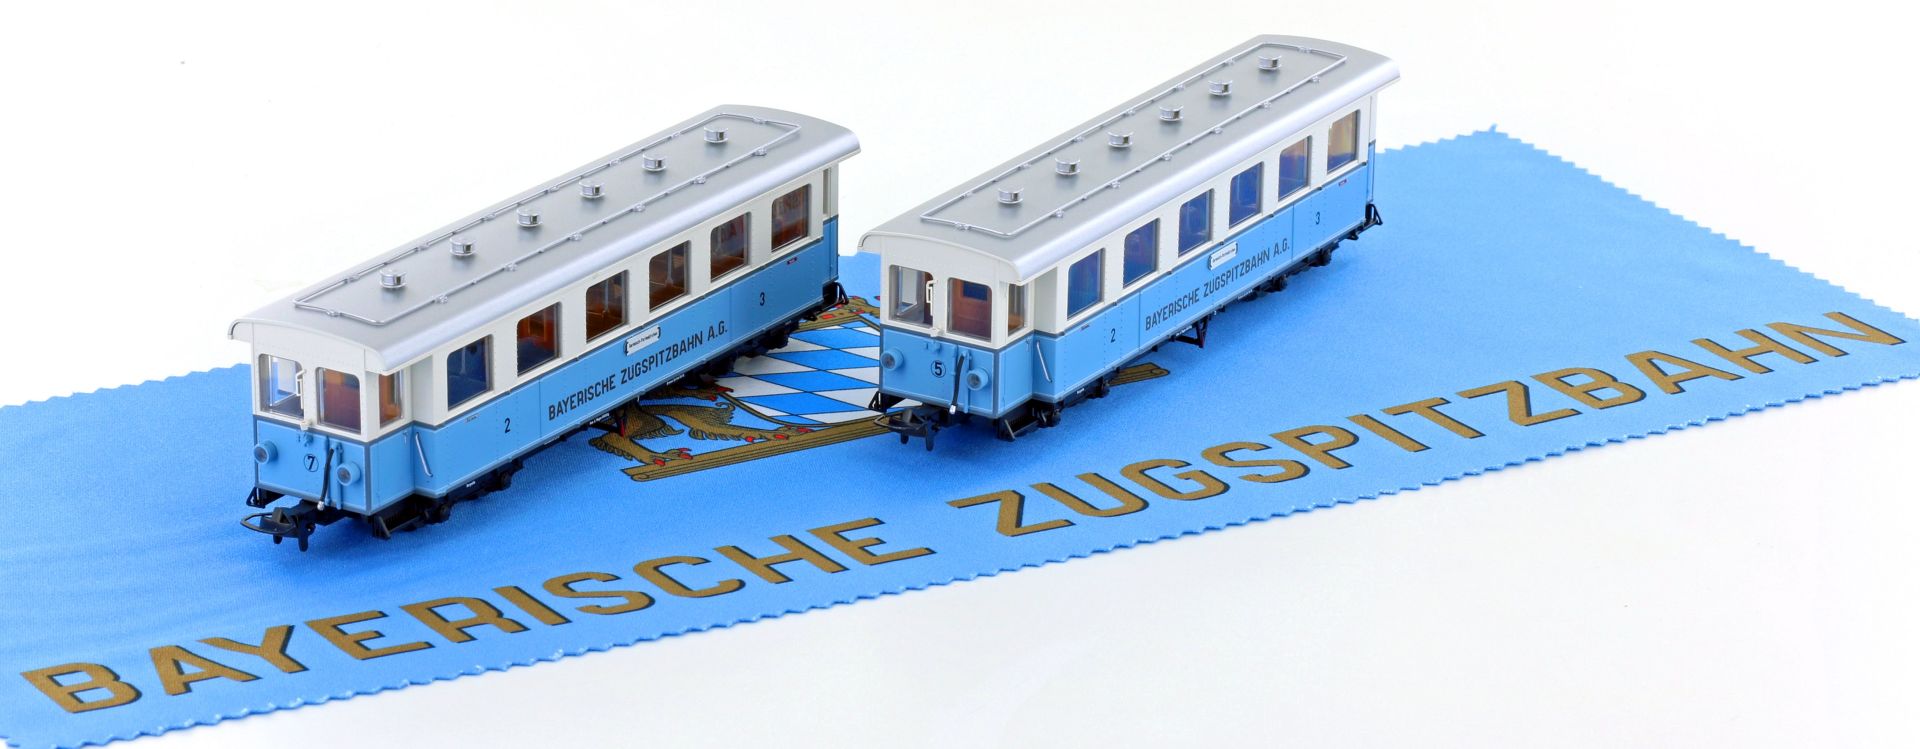 Hobbytrain H43101 - 2er Set Zugspitzbahn Ergänzungswagen, Ep.II-III, H0m